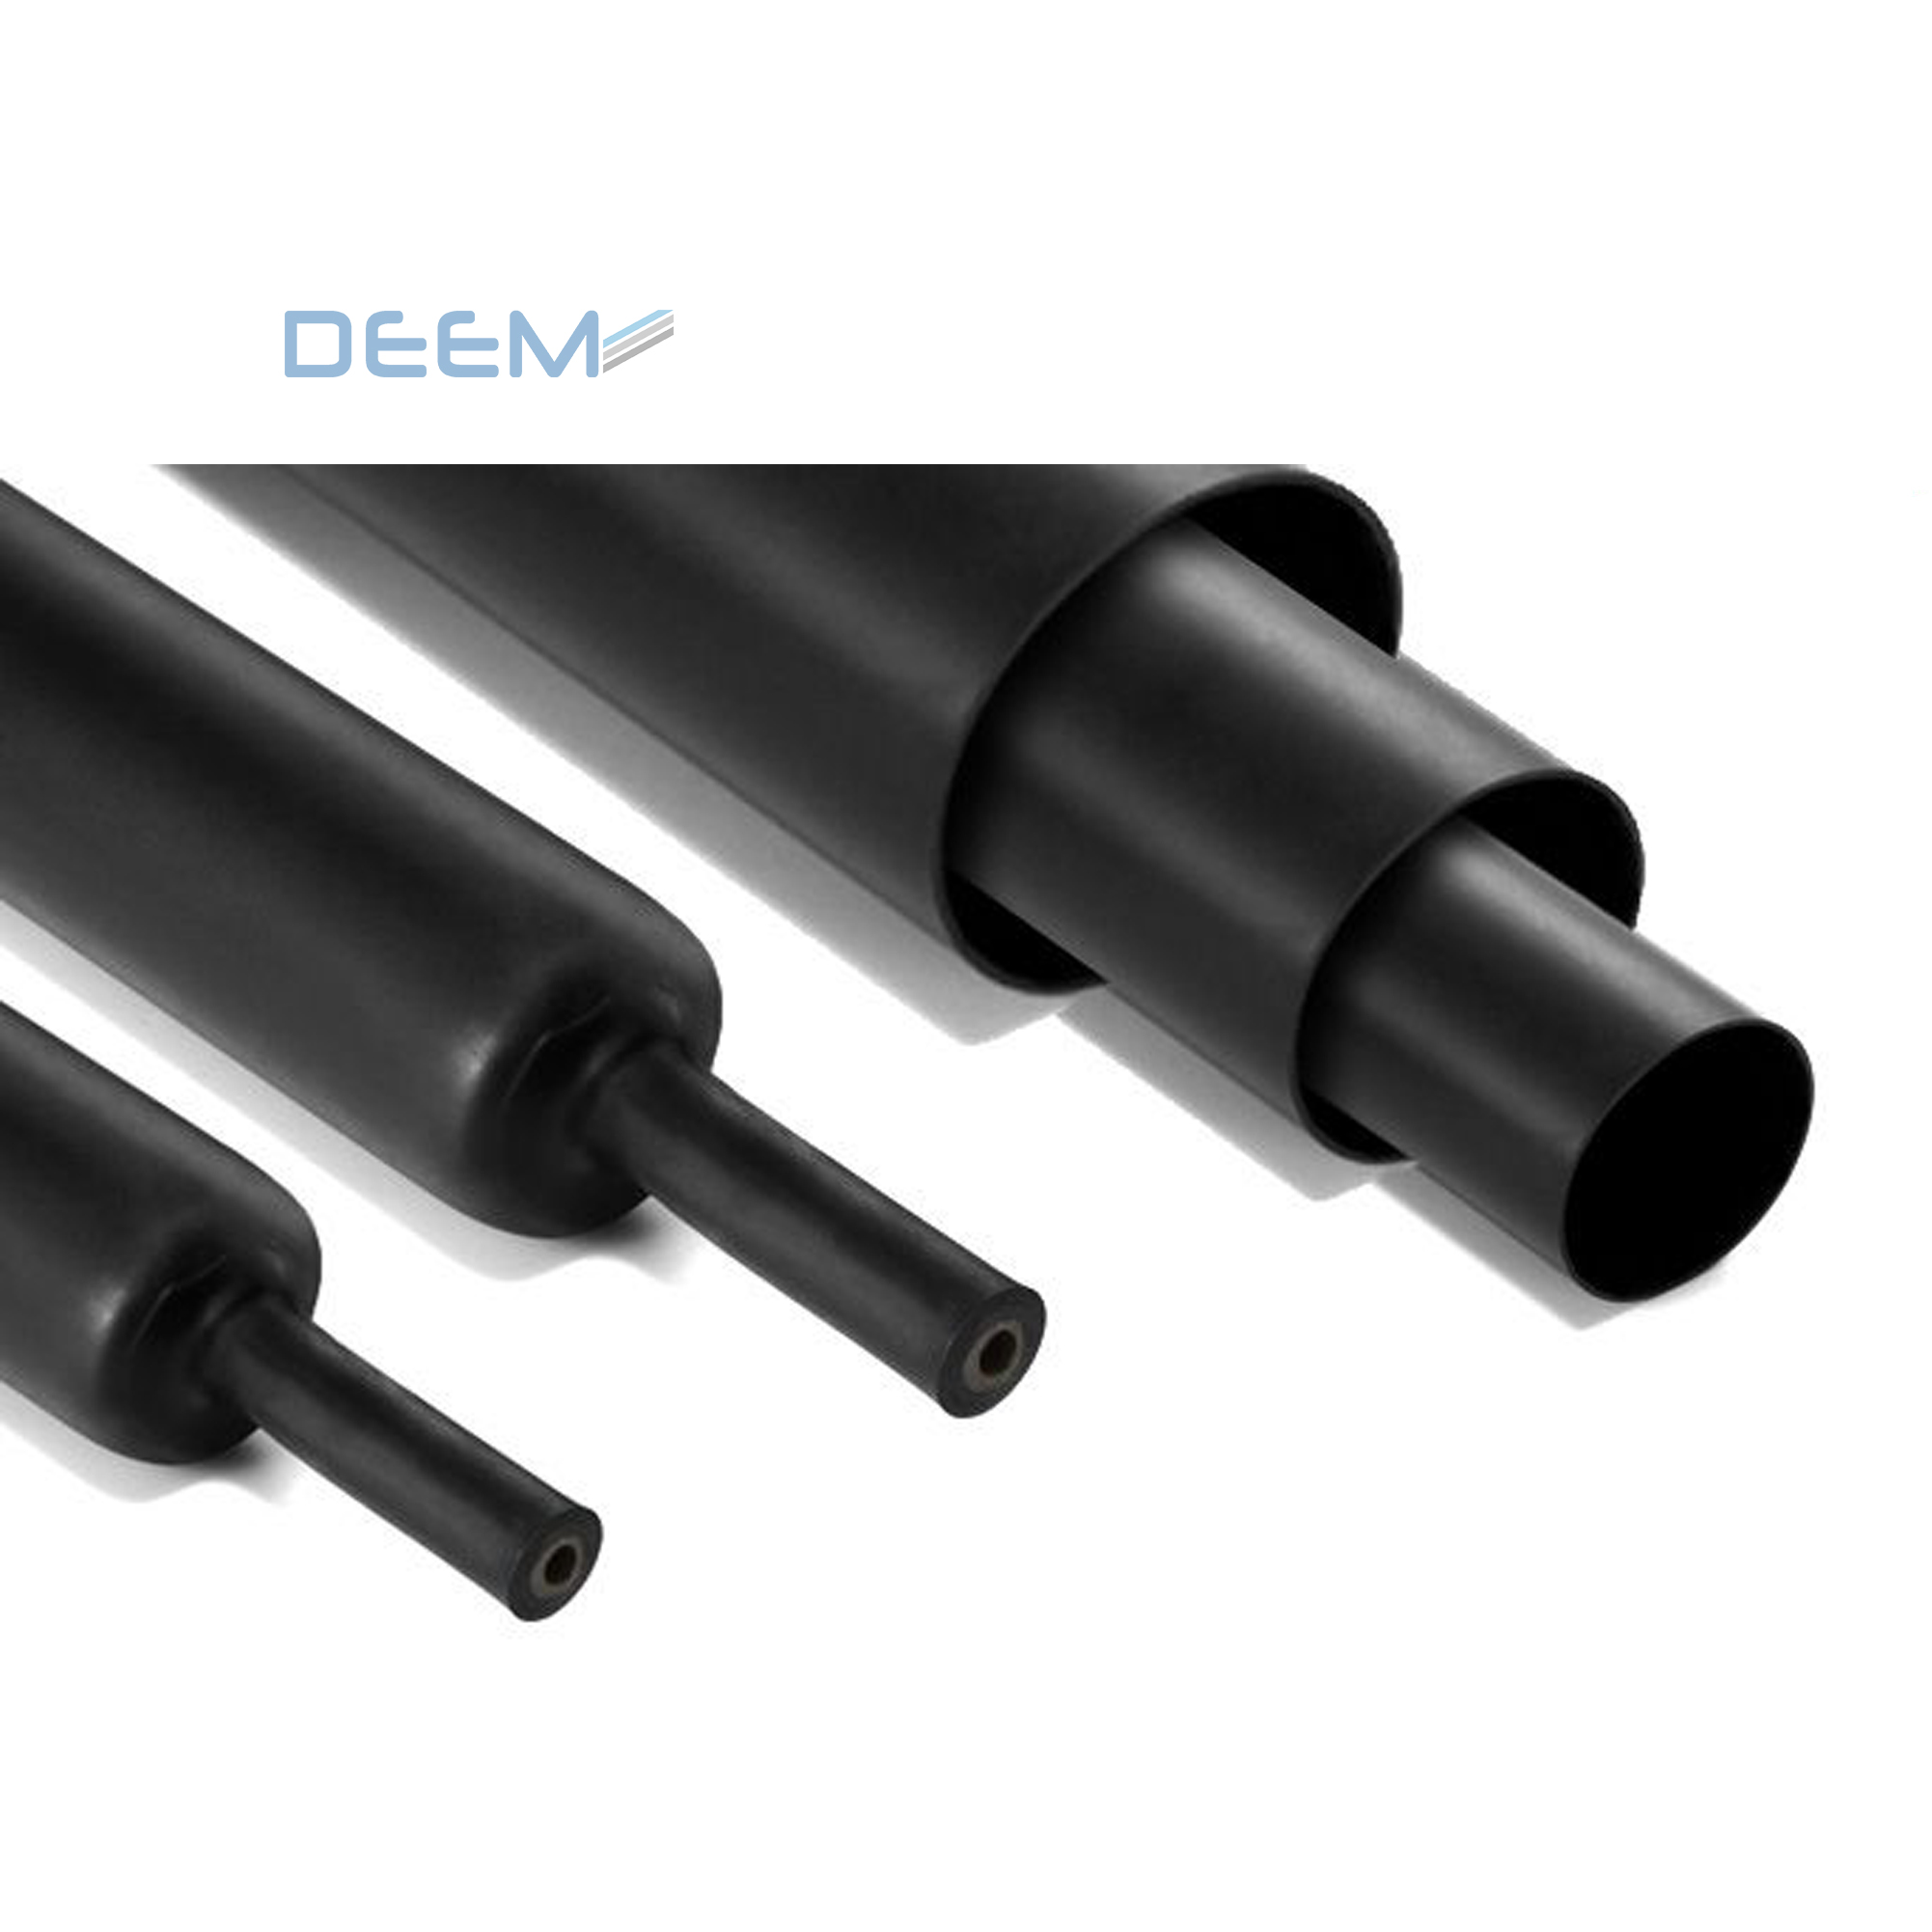 Medium wall heat shrink tubing (DM-W), with adhesive (DM-WA)